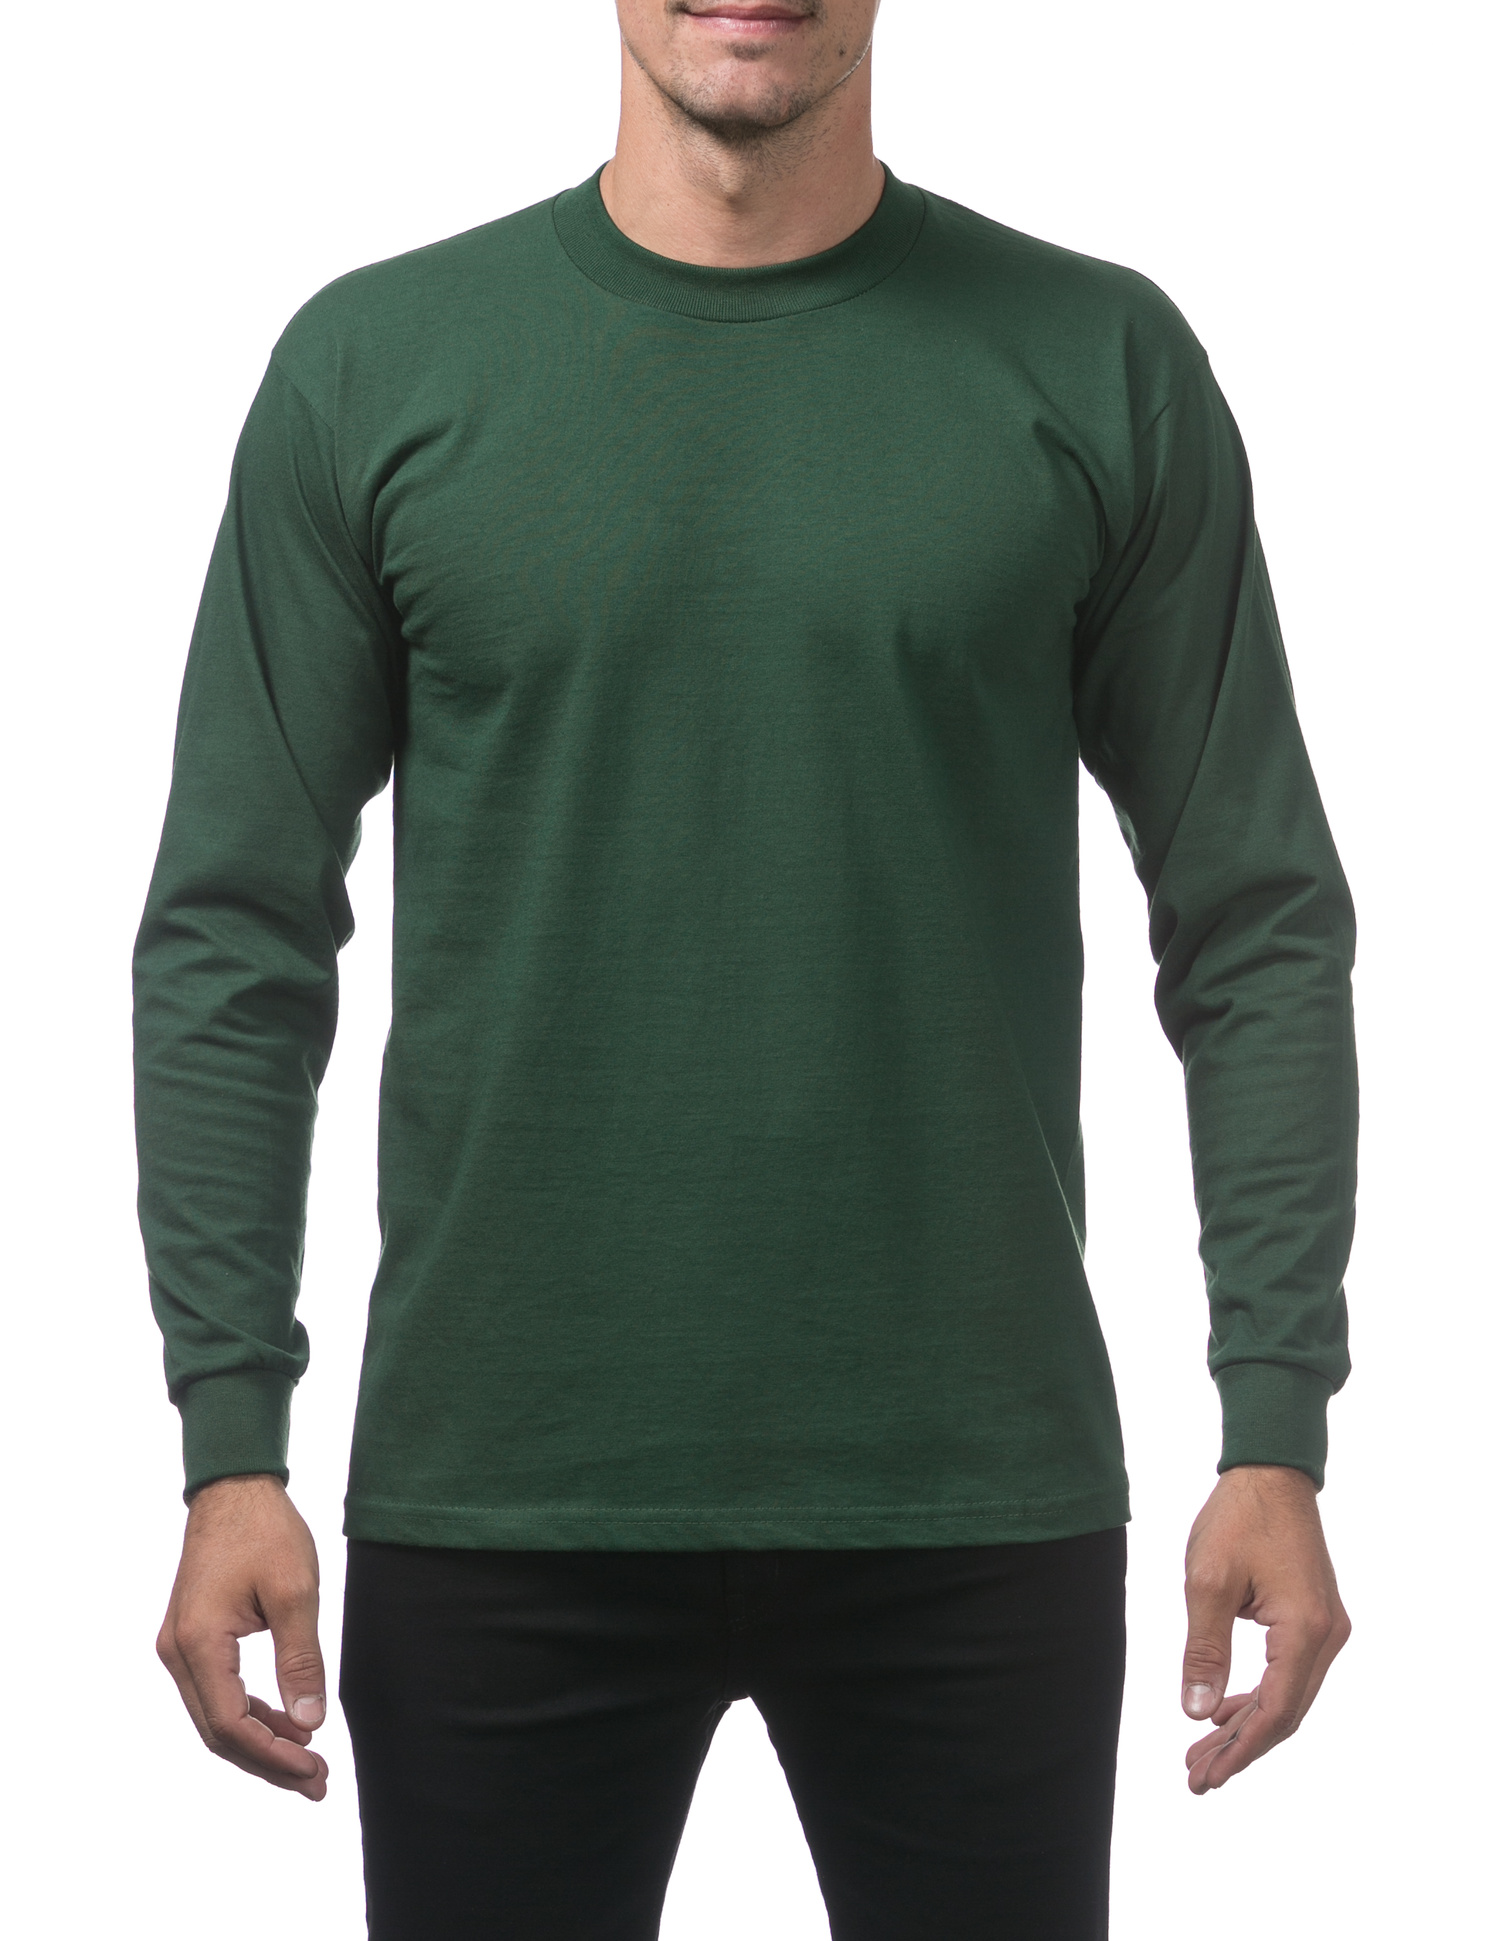 Baseball Raglan Long Sleeve T-Shirt Crew neck Heavy Weight Thermal Sweatshirts 